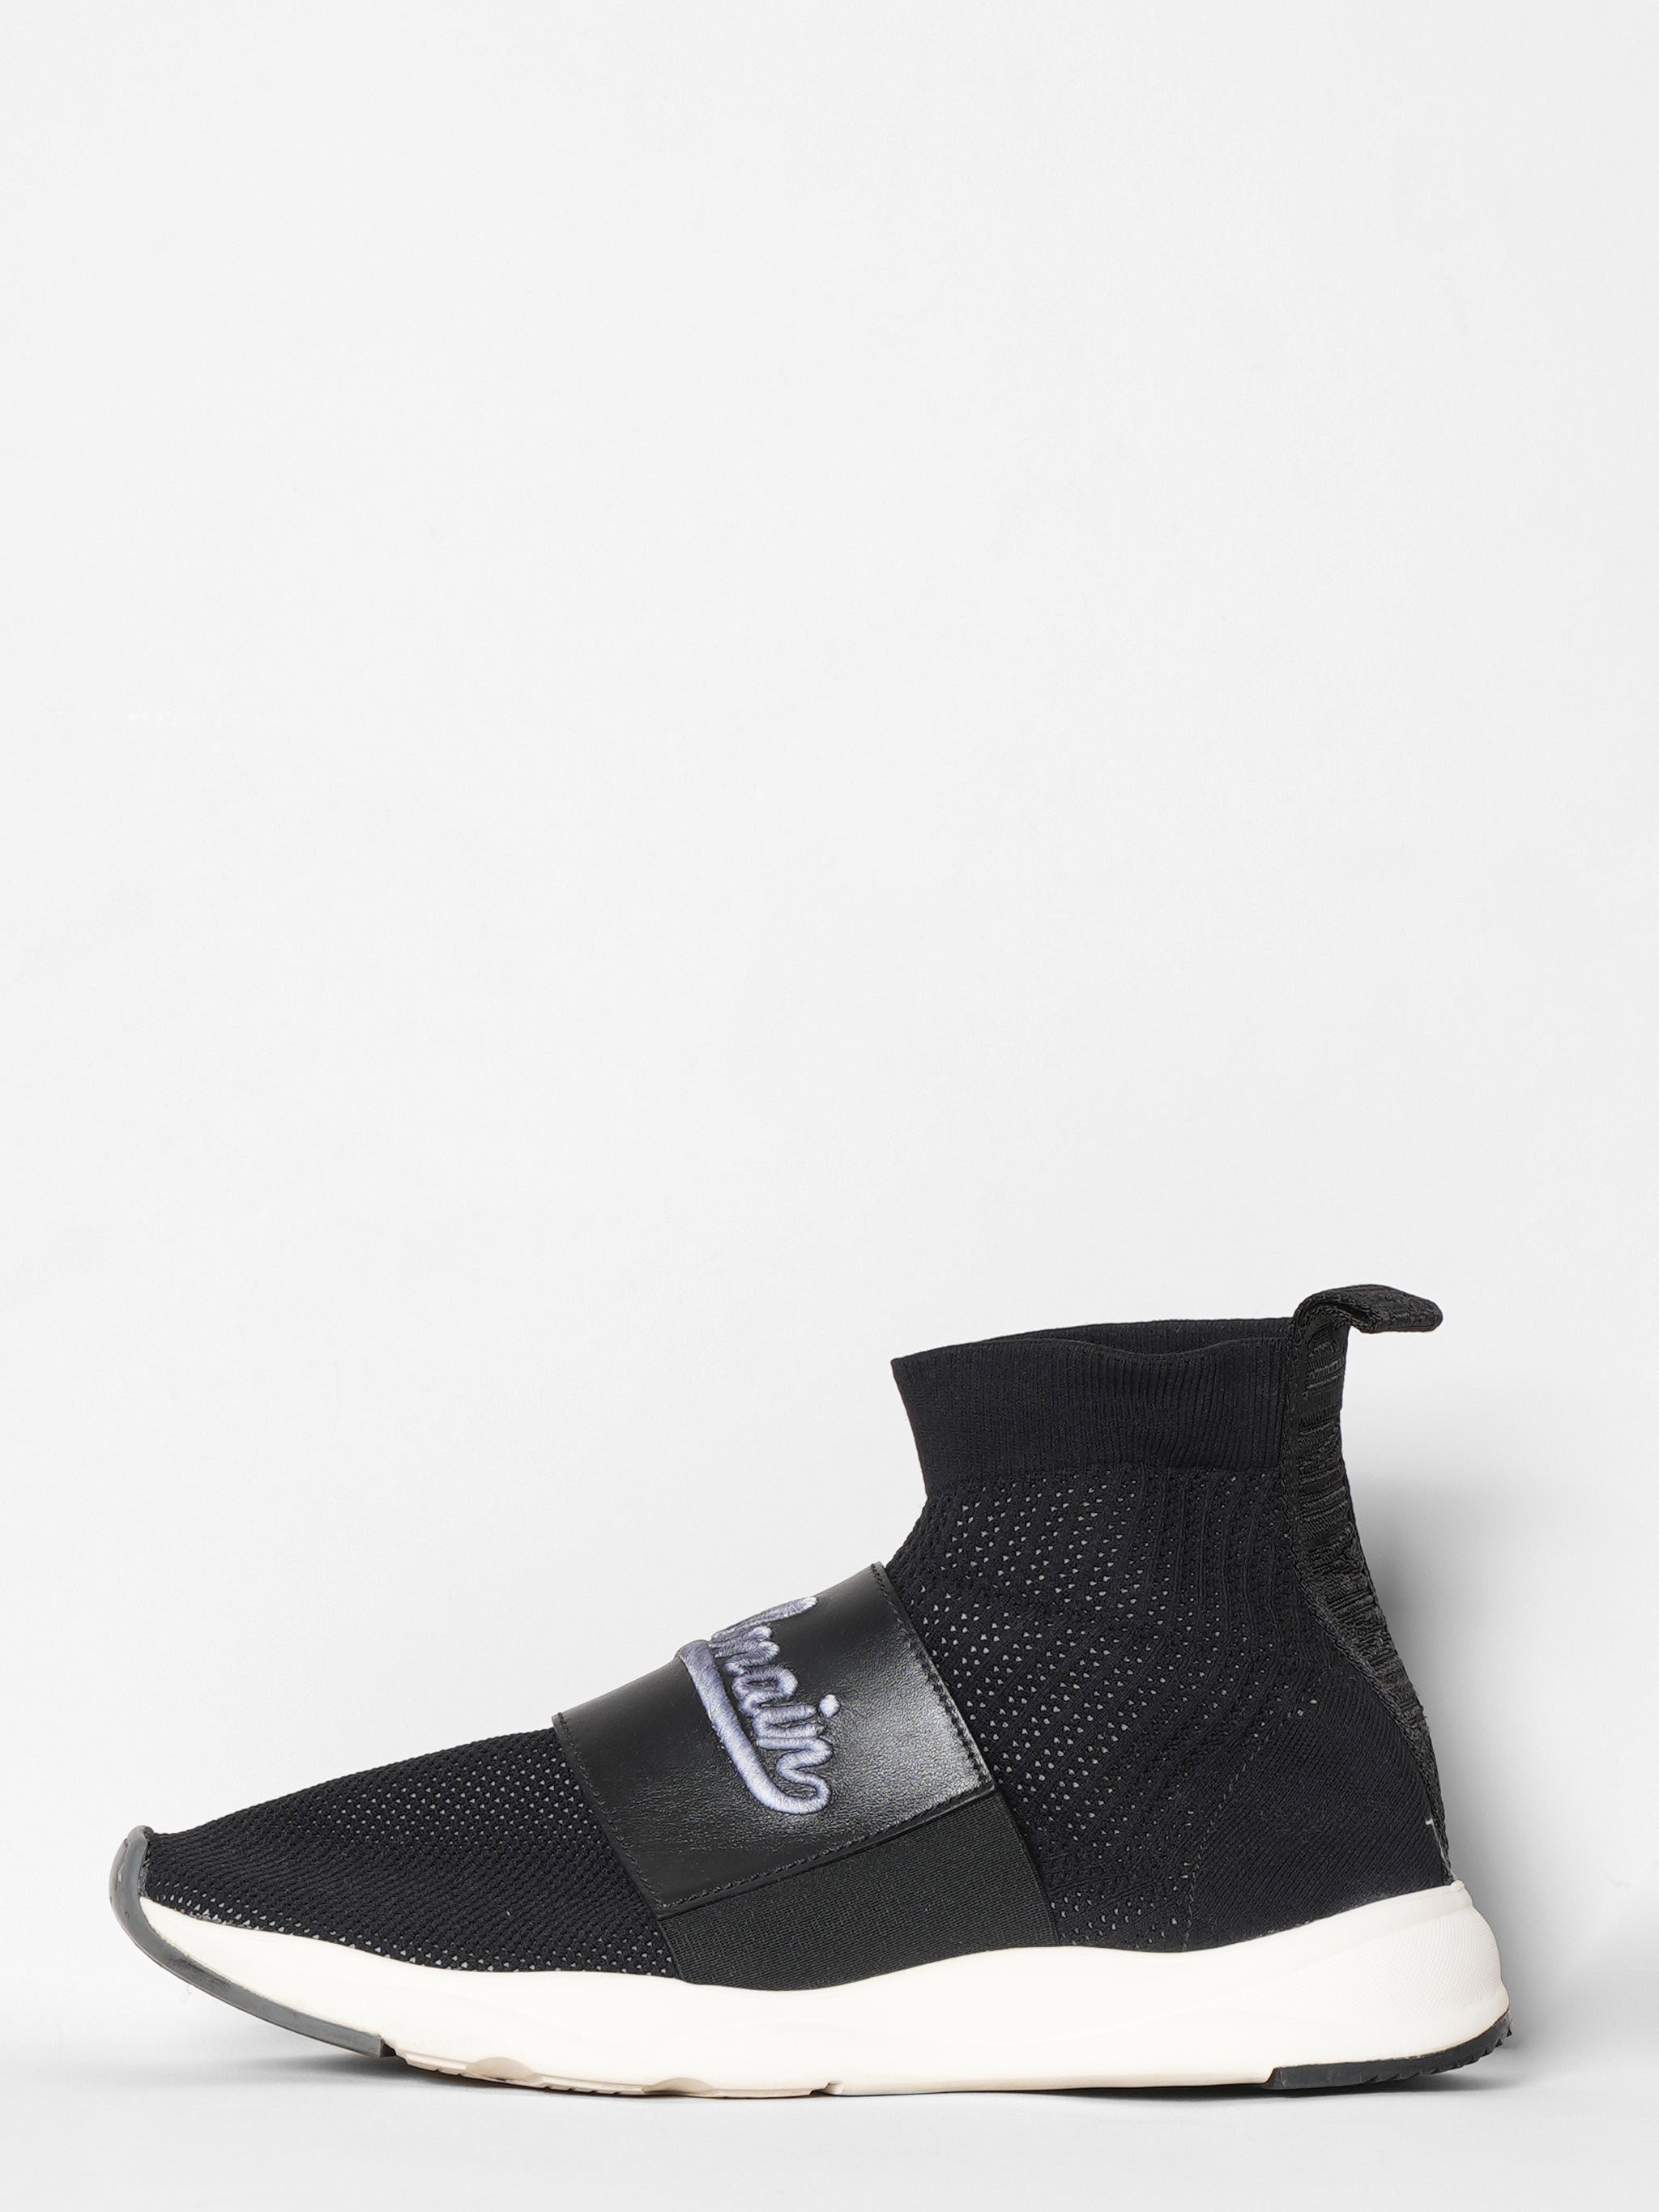 BALENCIAGA | x adidas 'Speed' High Top Sock Sneakers | Men | Lane Crawford